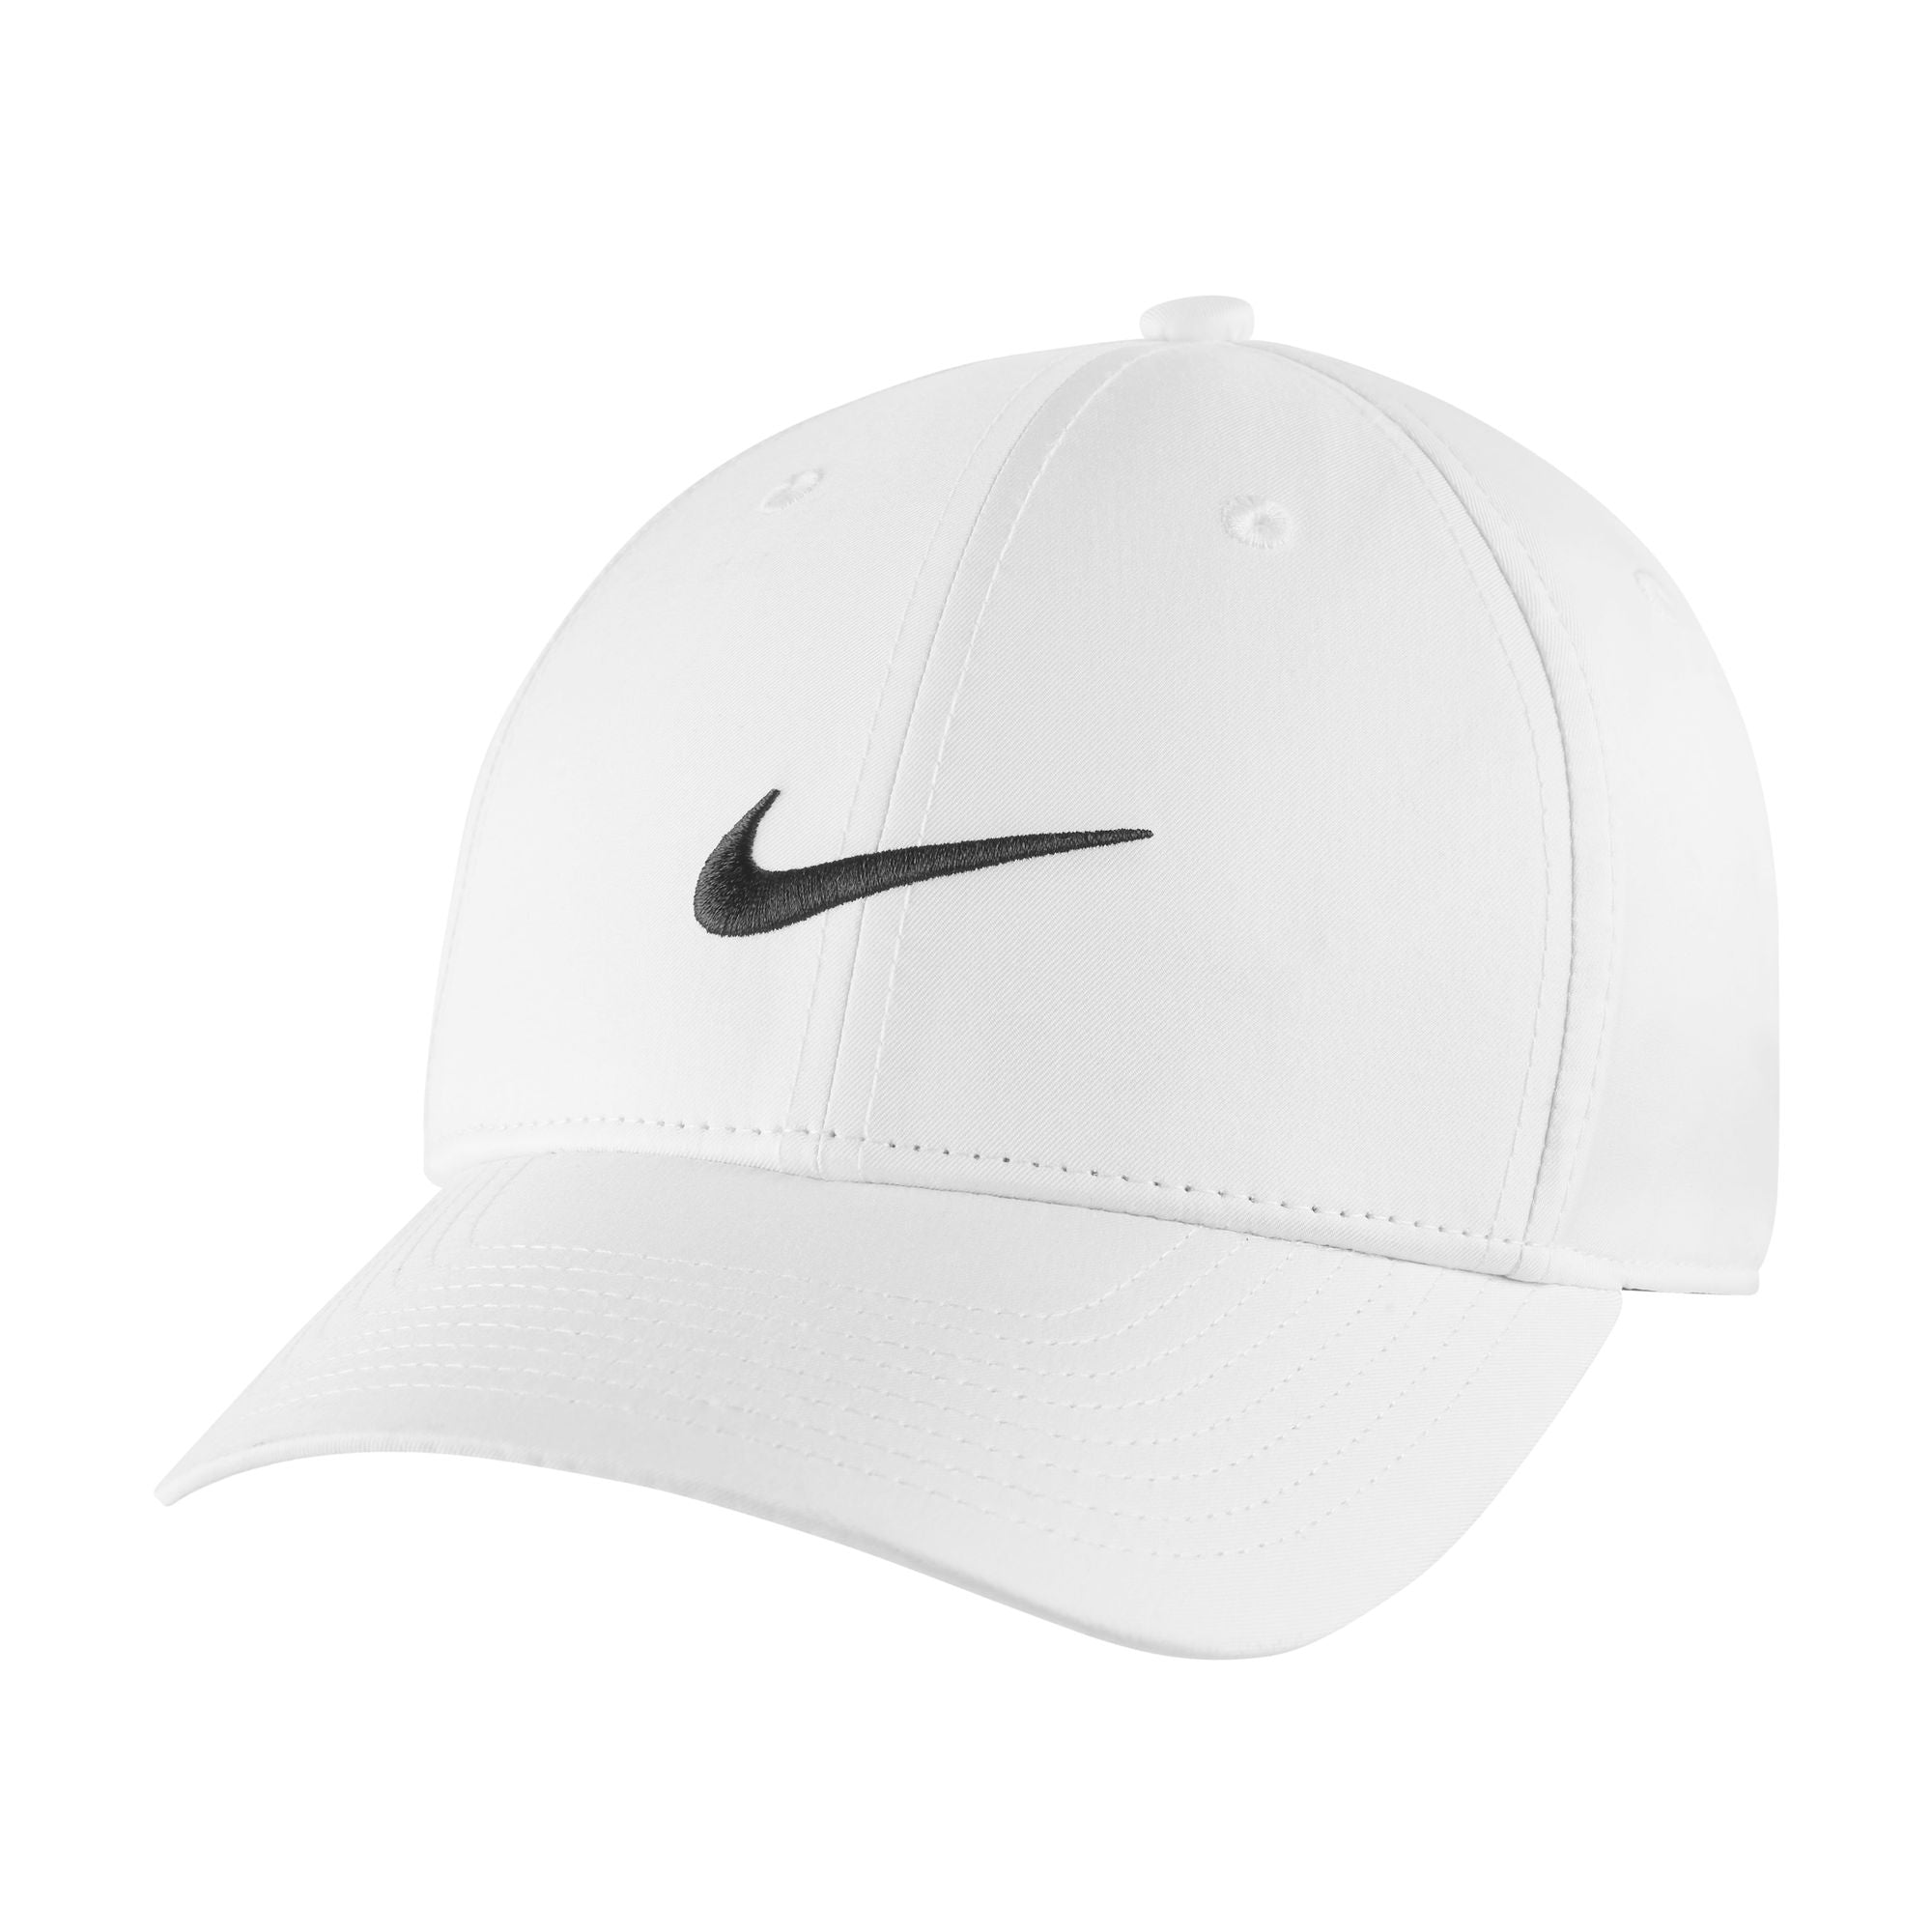 Nike Dri-Fit Legacy 91 Hat in White (Unisex)